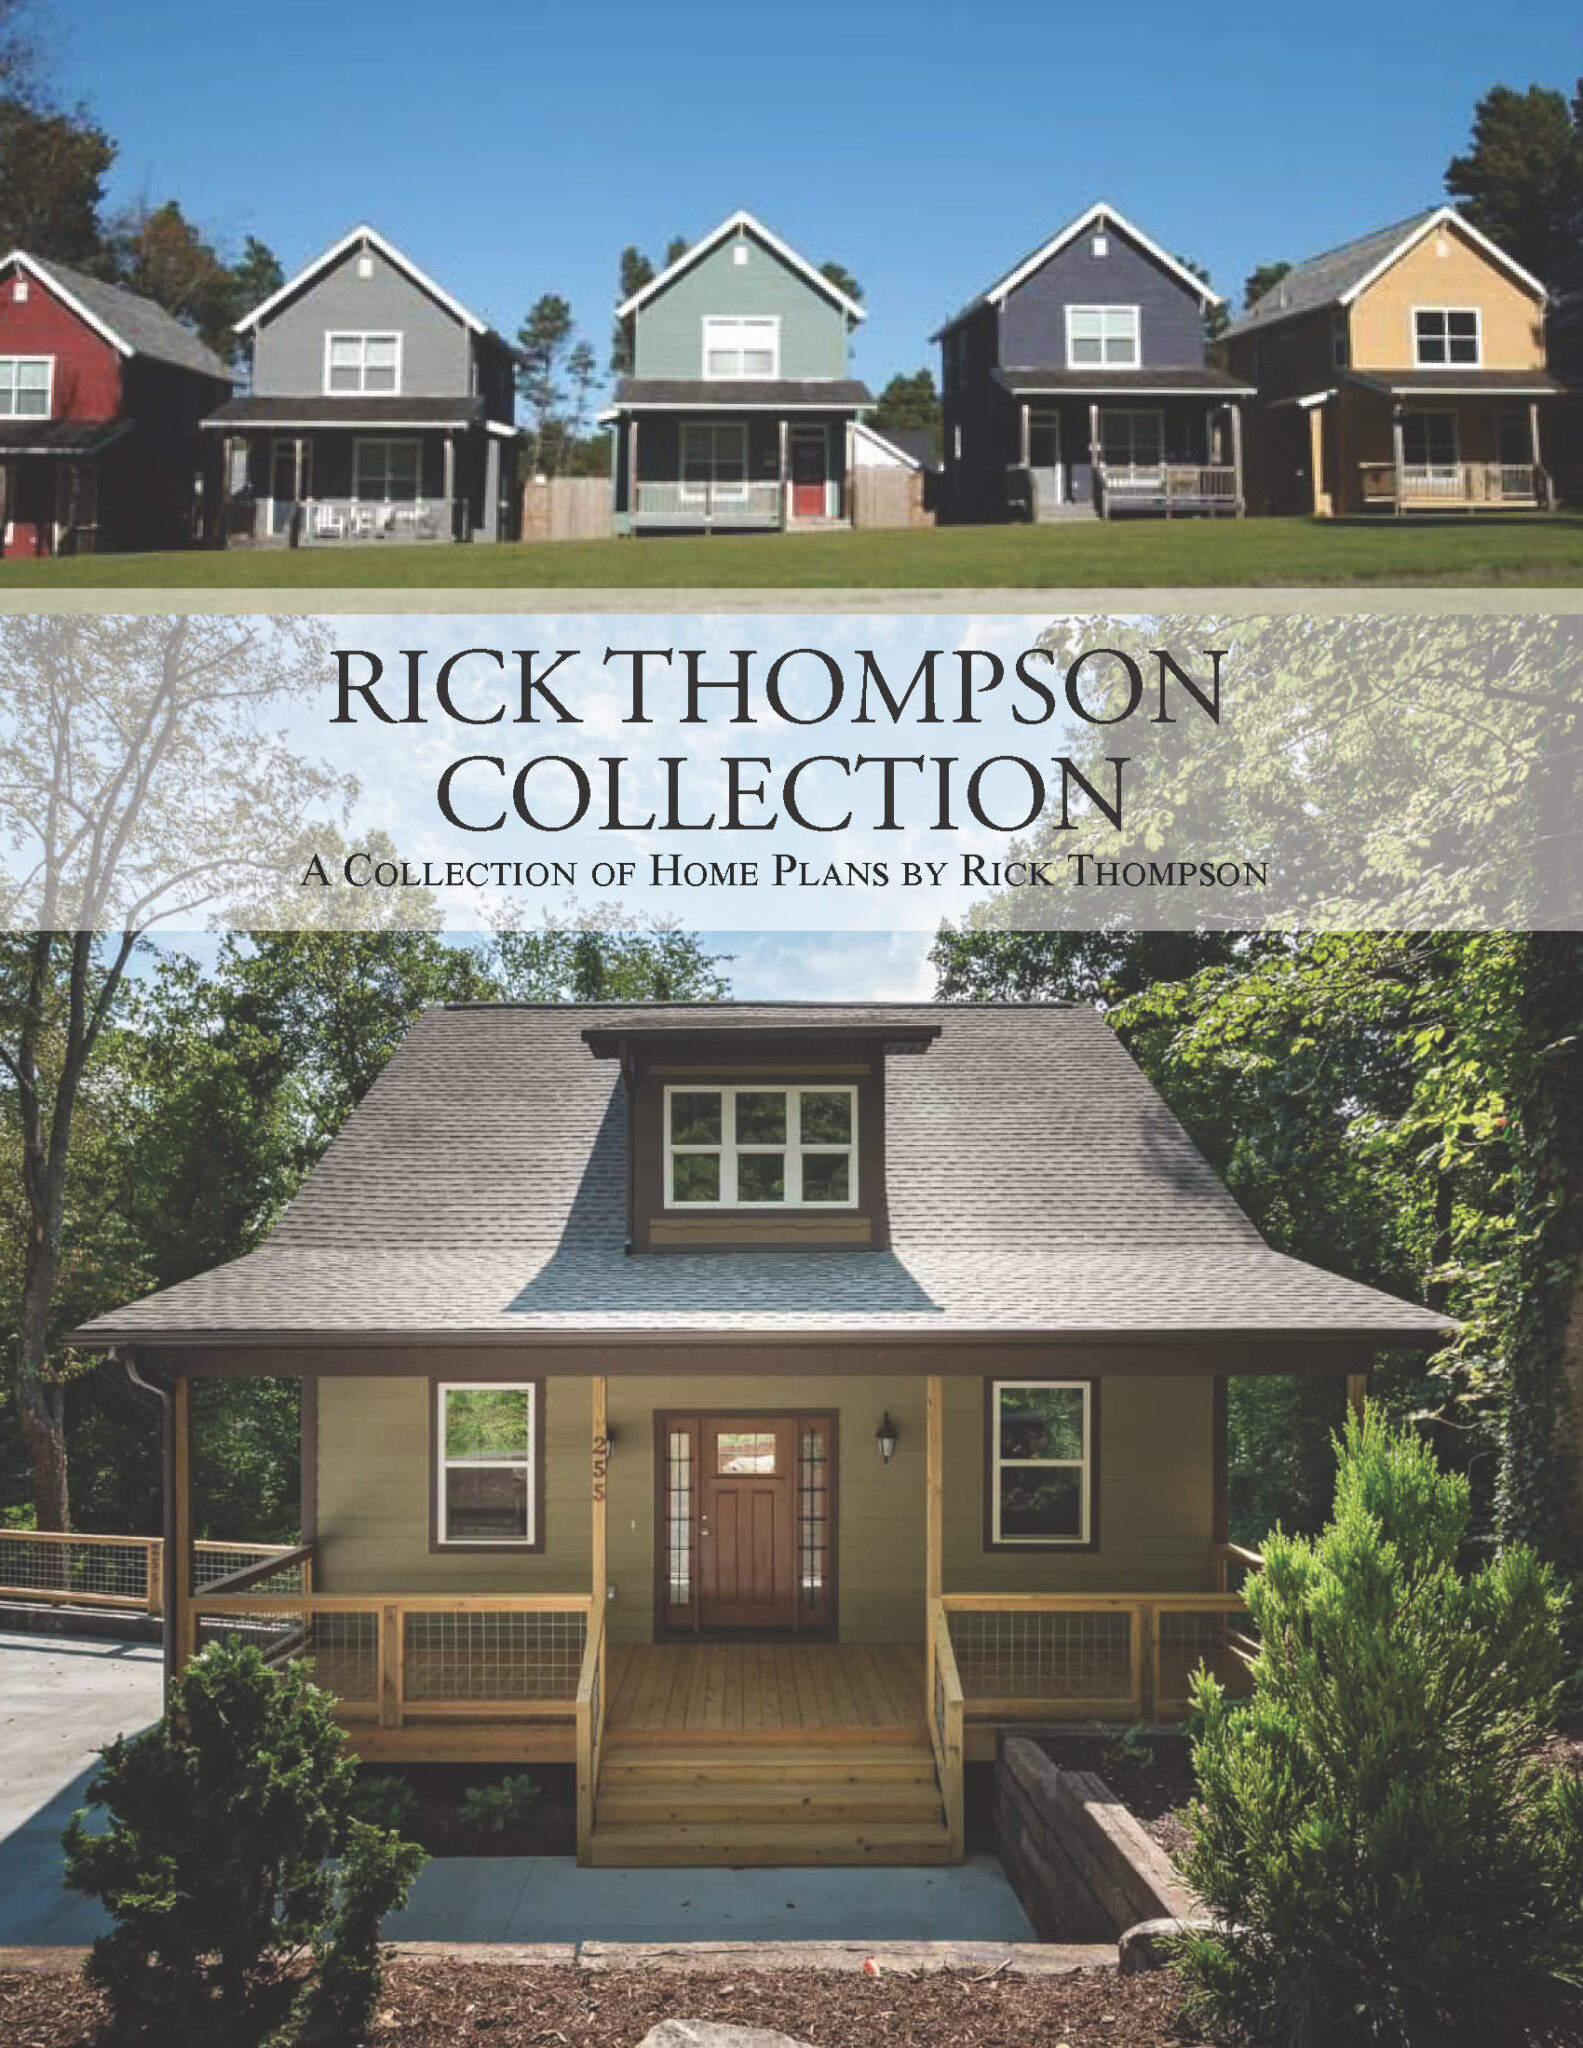 Rick Thompson Collection